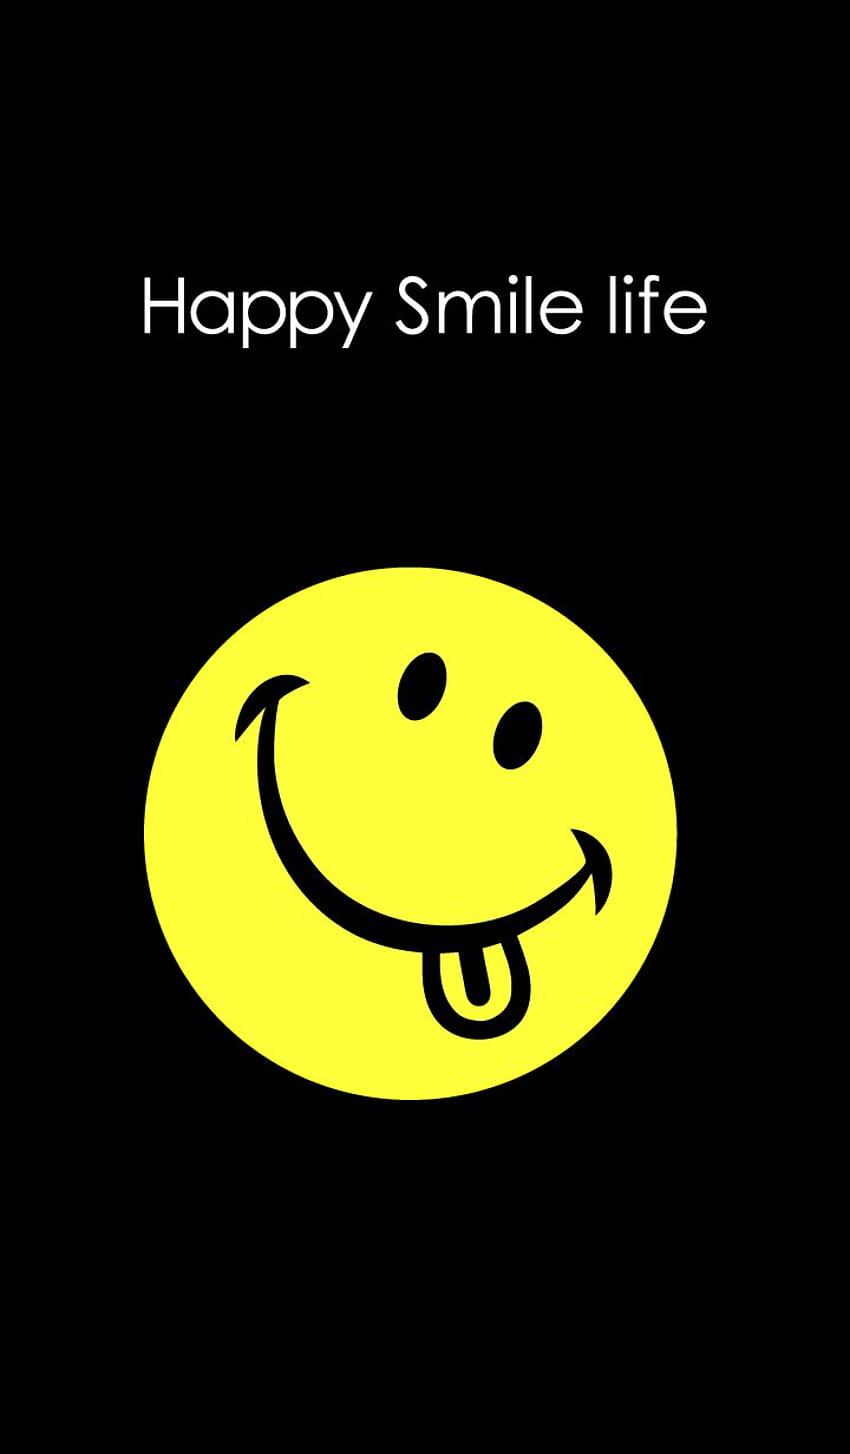 Feliz Sorria a vida, mantenha o sorriso Papel de parede de celular HD